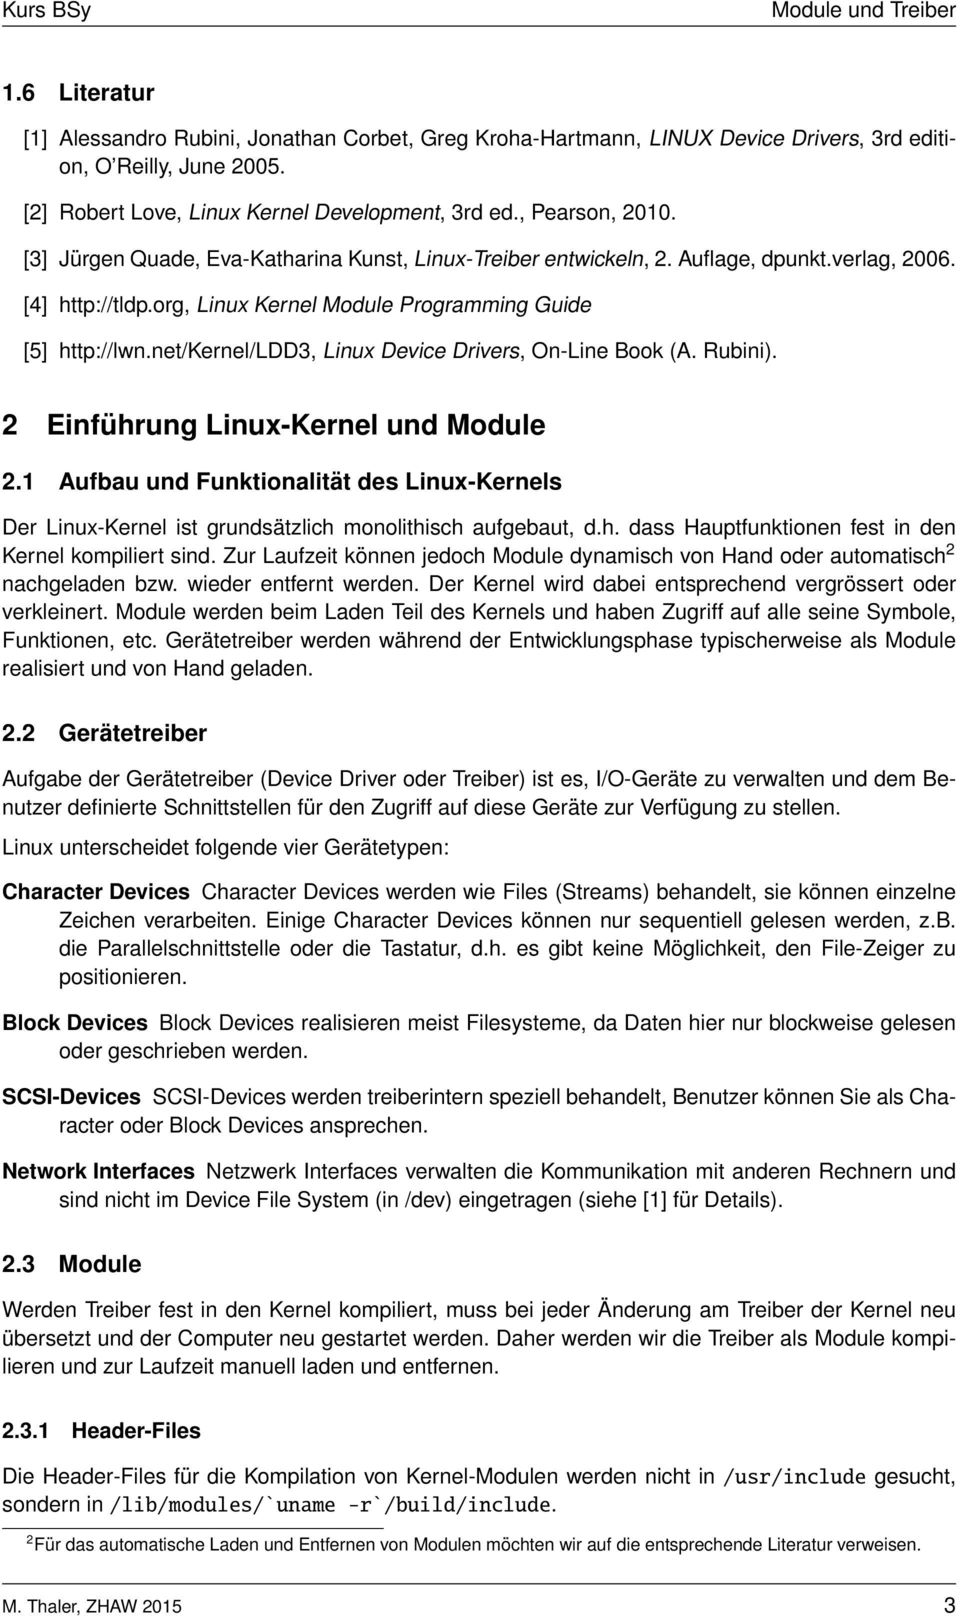 net/kernel/ldd3, Linux Device Drivers, On-Line Book (A. Rubini). 2 Einführung Linux-Kernel und Module 2.